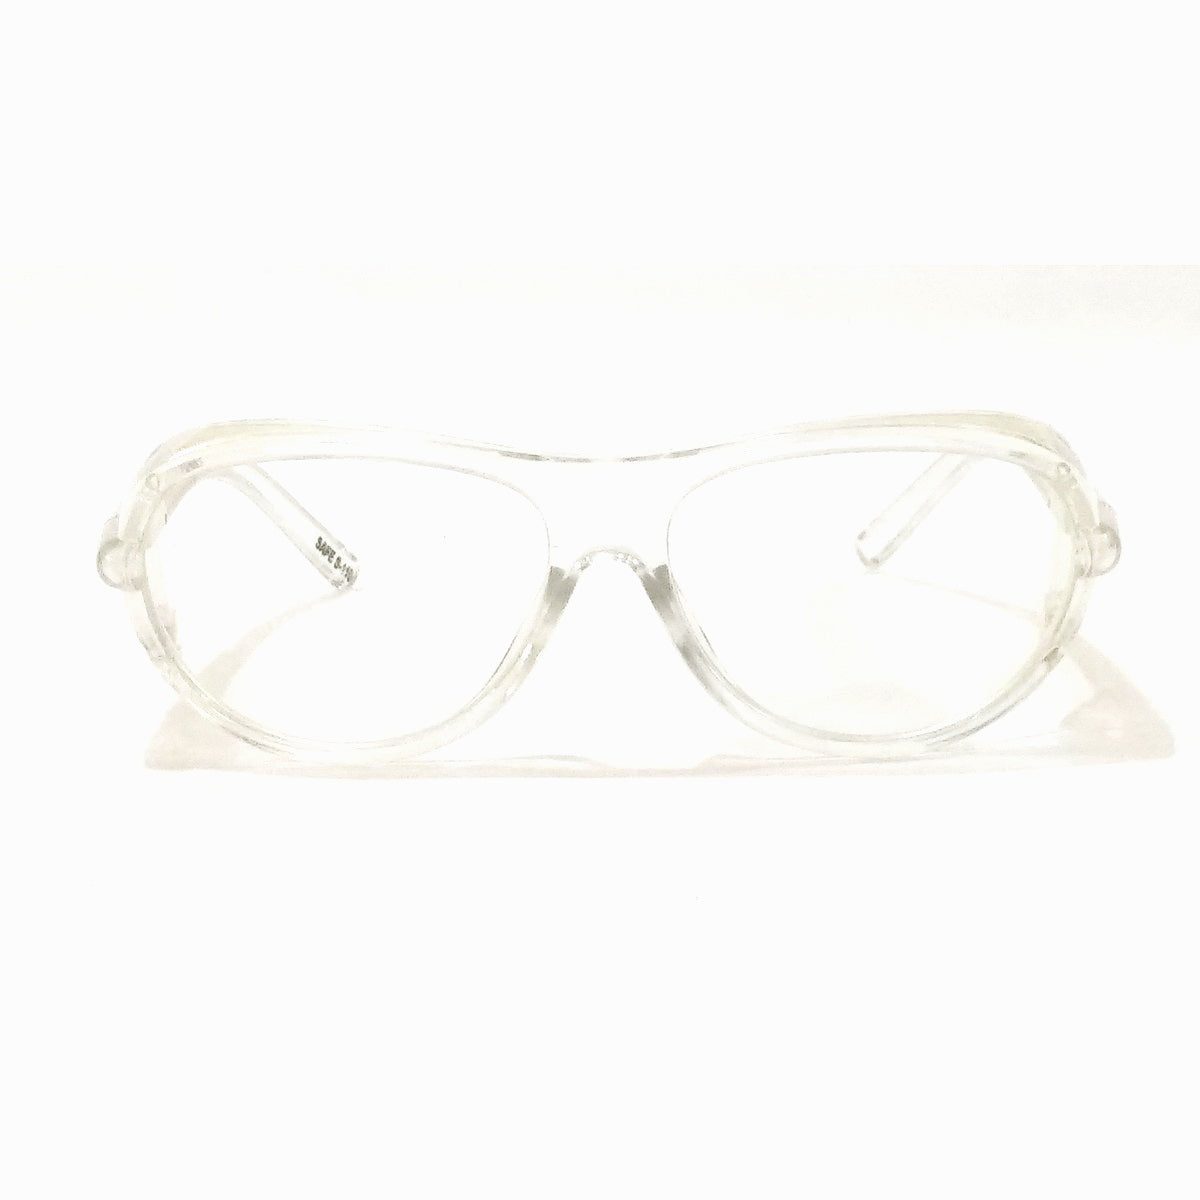 Clear Prescription Eye Safety Glasses M110-41 - Glasses India Online